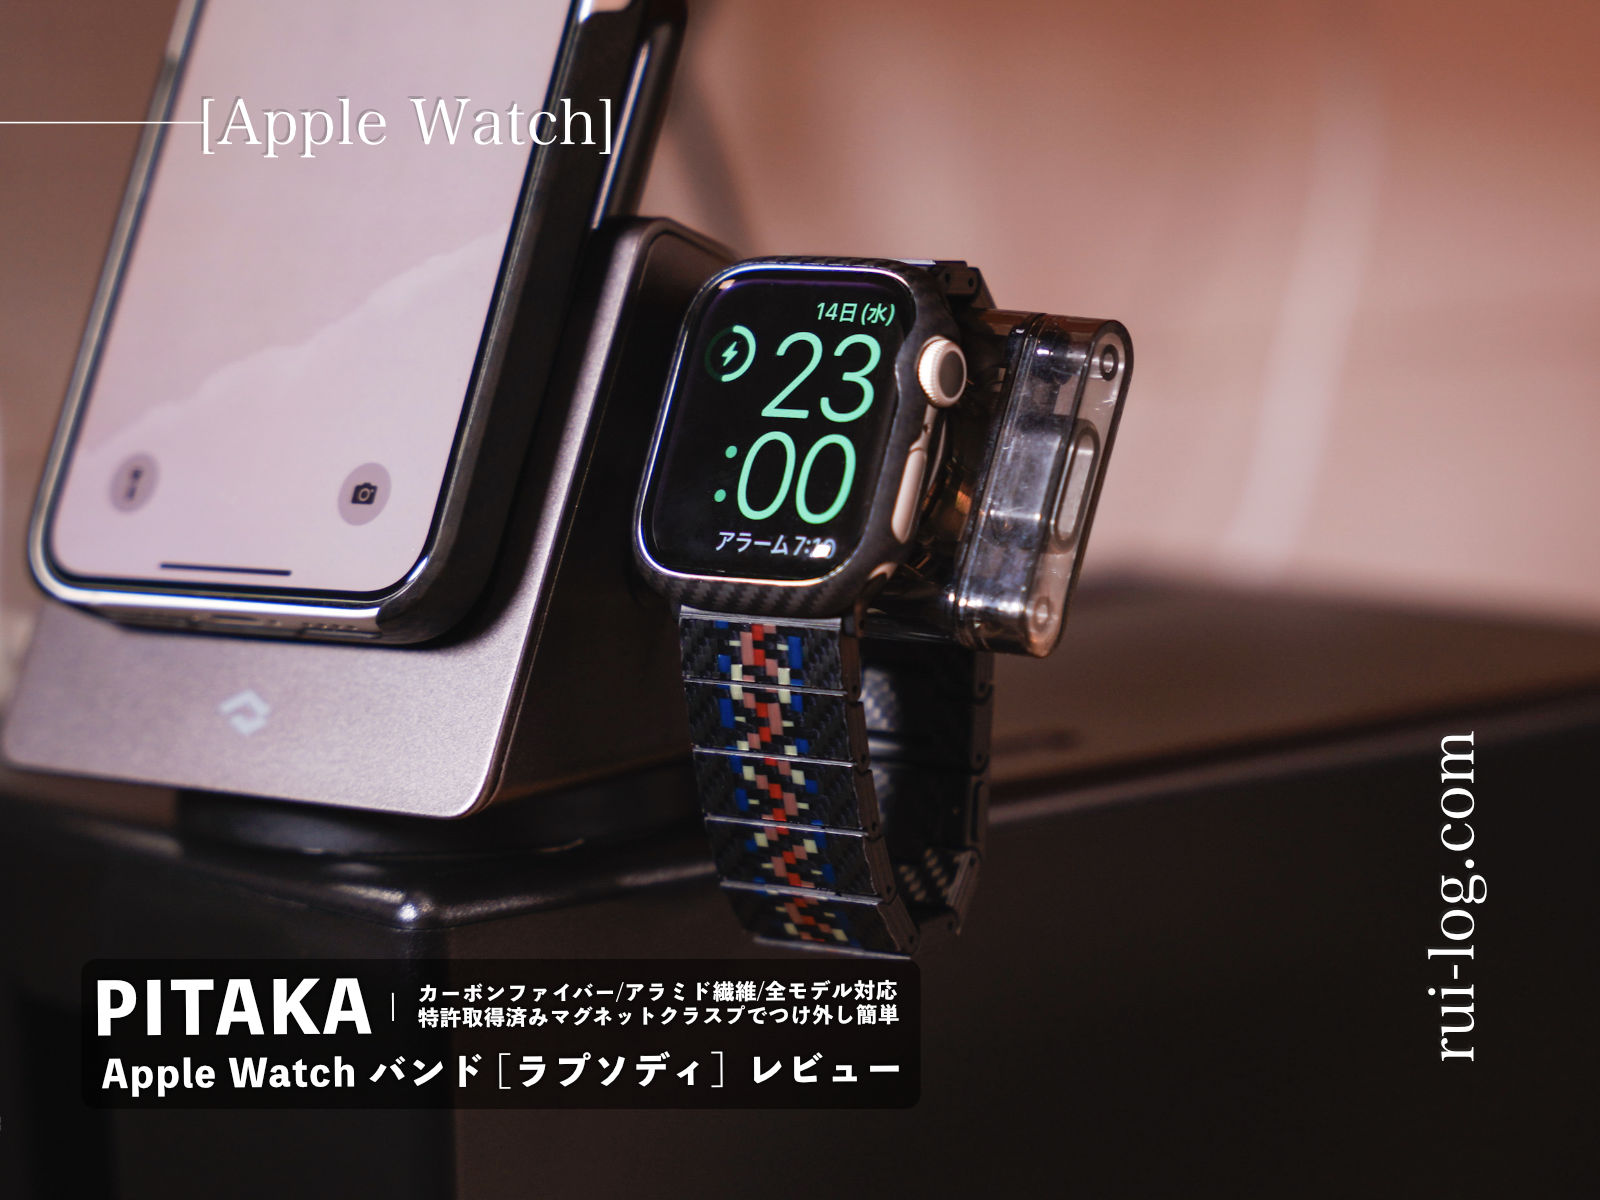 PITAKA Apple Watch バンド（ラプソディ）レビュー カーボン繊維×アラミド繊維で頑丈なのに軽い！ ルイログ